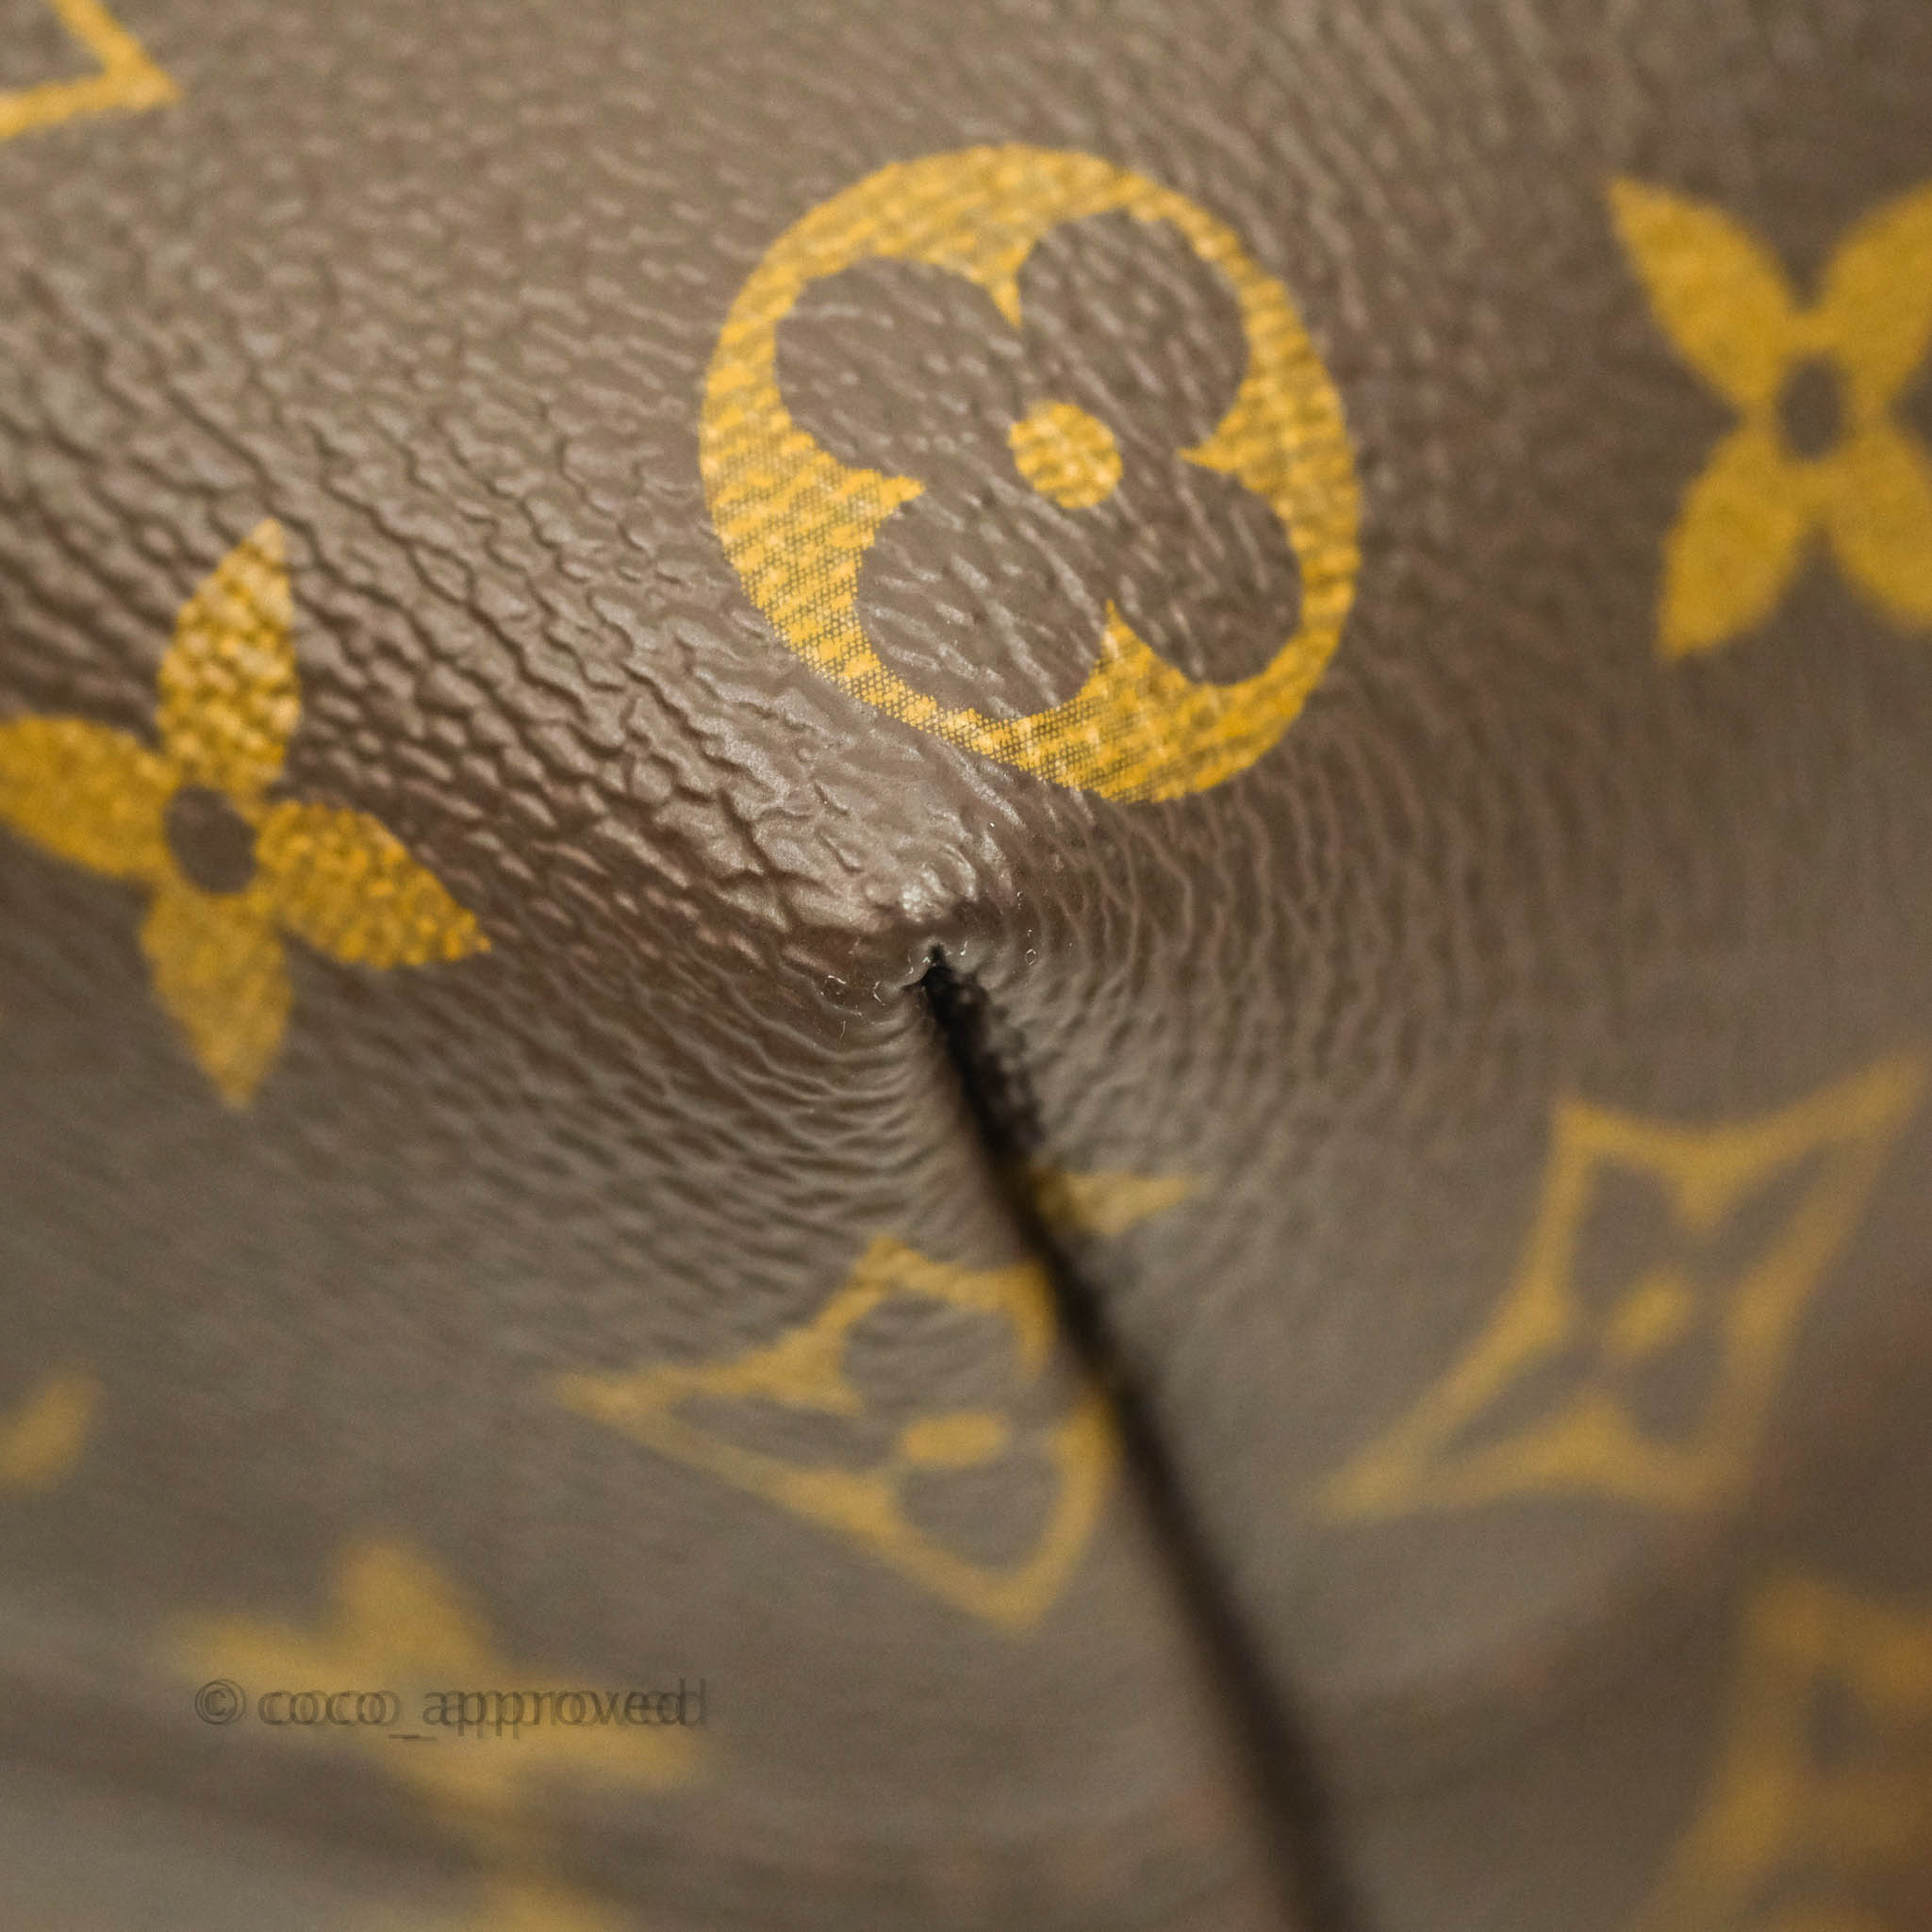 Louis Vuitton Montsouris BB Backpack Monogram Canvas – Coco Approved Studio